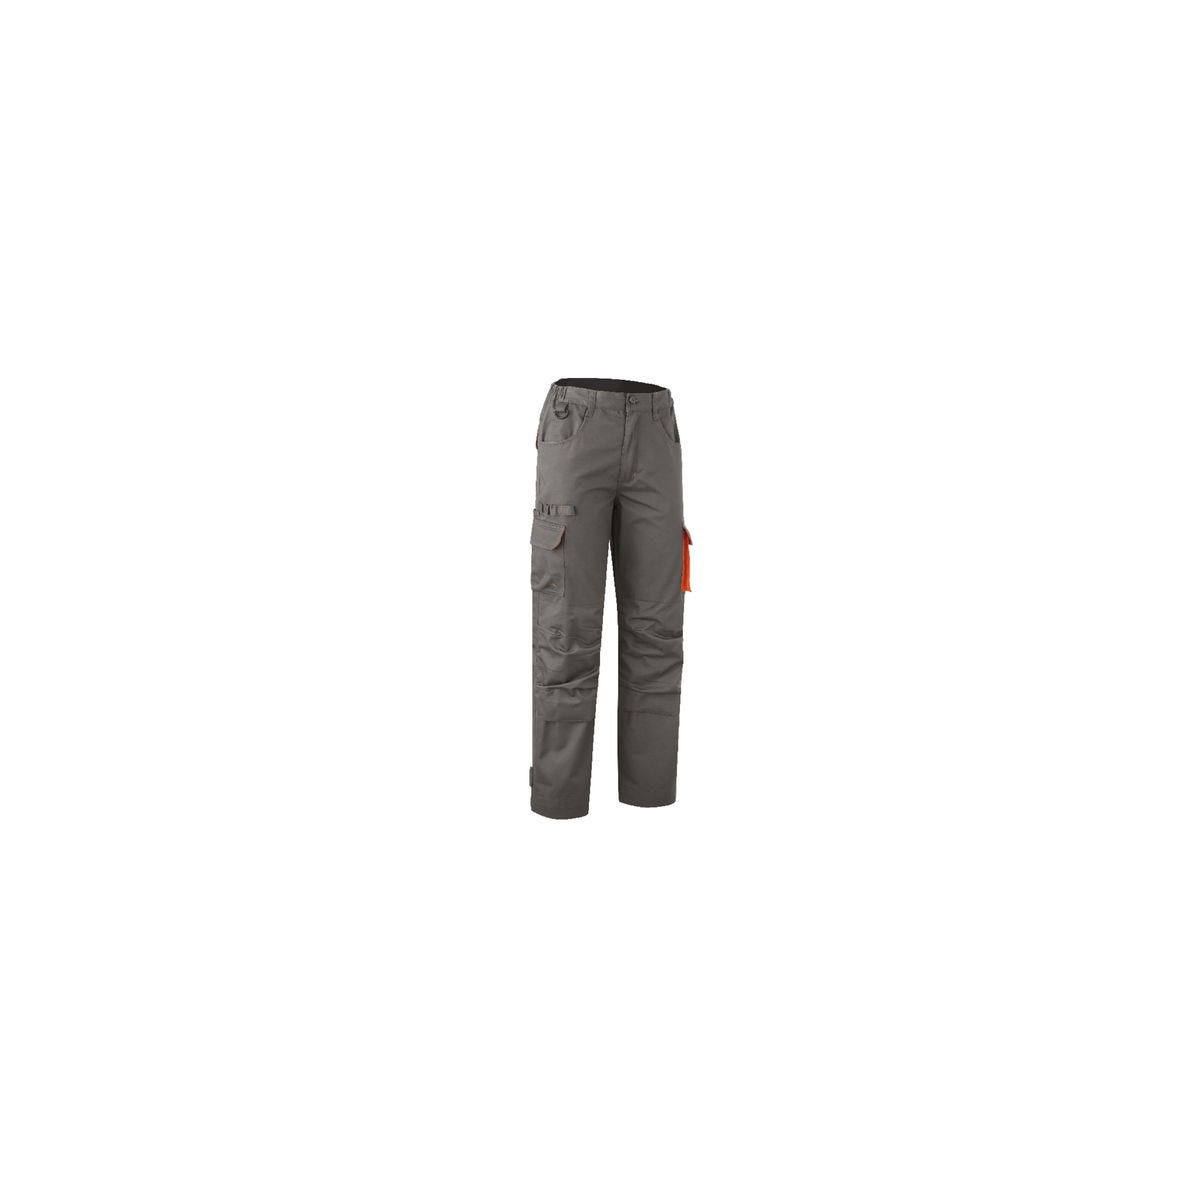 Pantalon MISTI Gris/orange - COVERGUARD - Taille XL 0